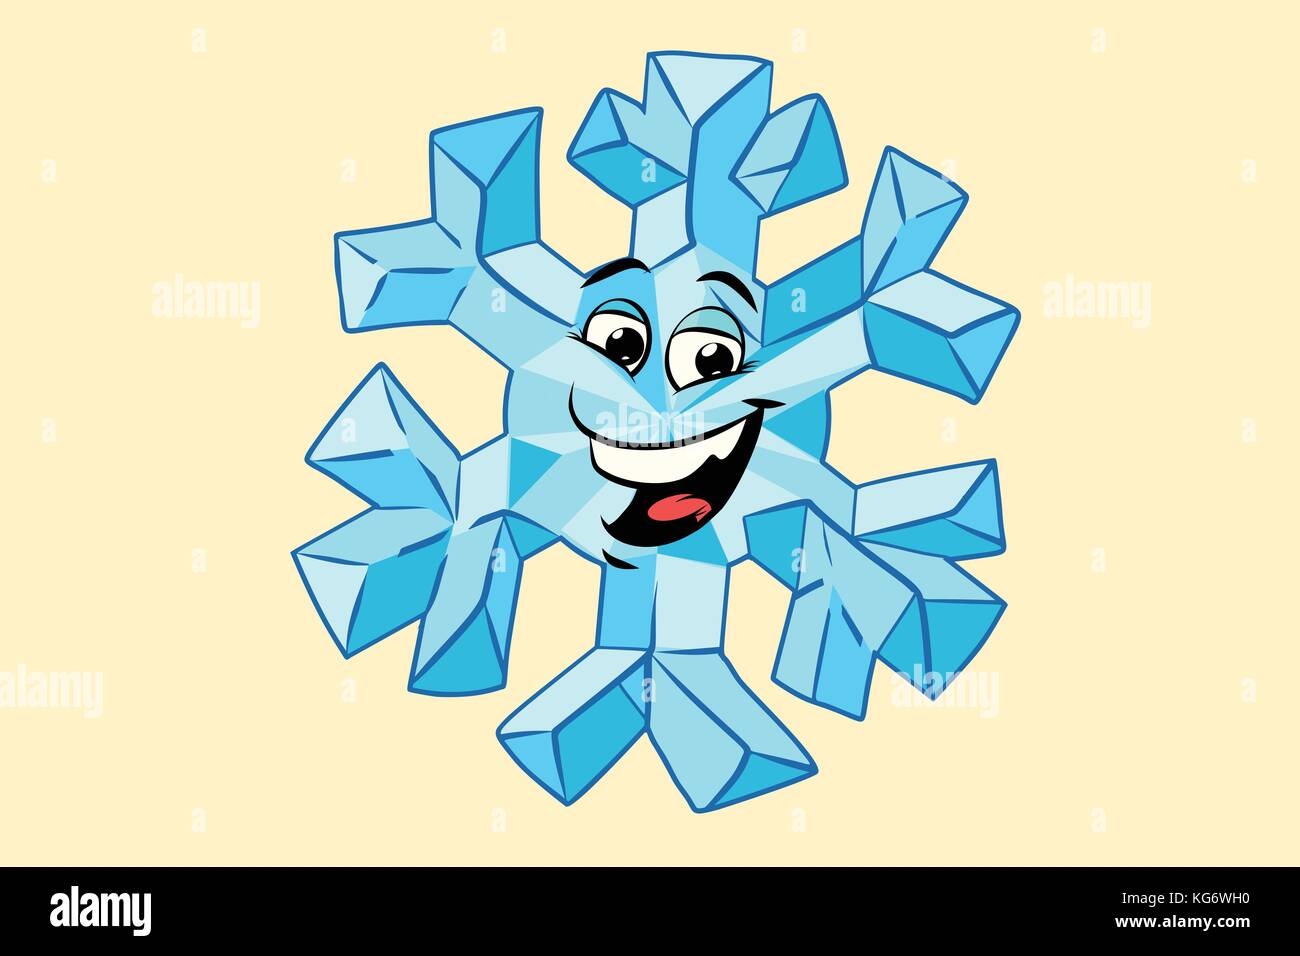 snowflake cute smiley face character. Comic book cartoon pop art illustration retro vector Stock Vector